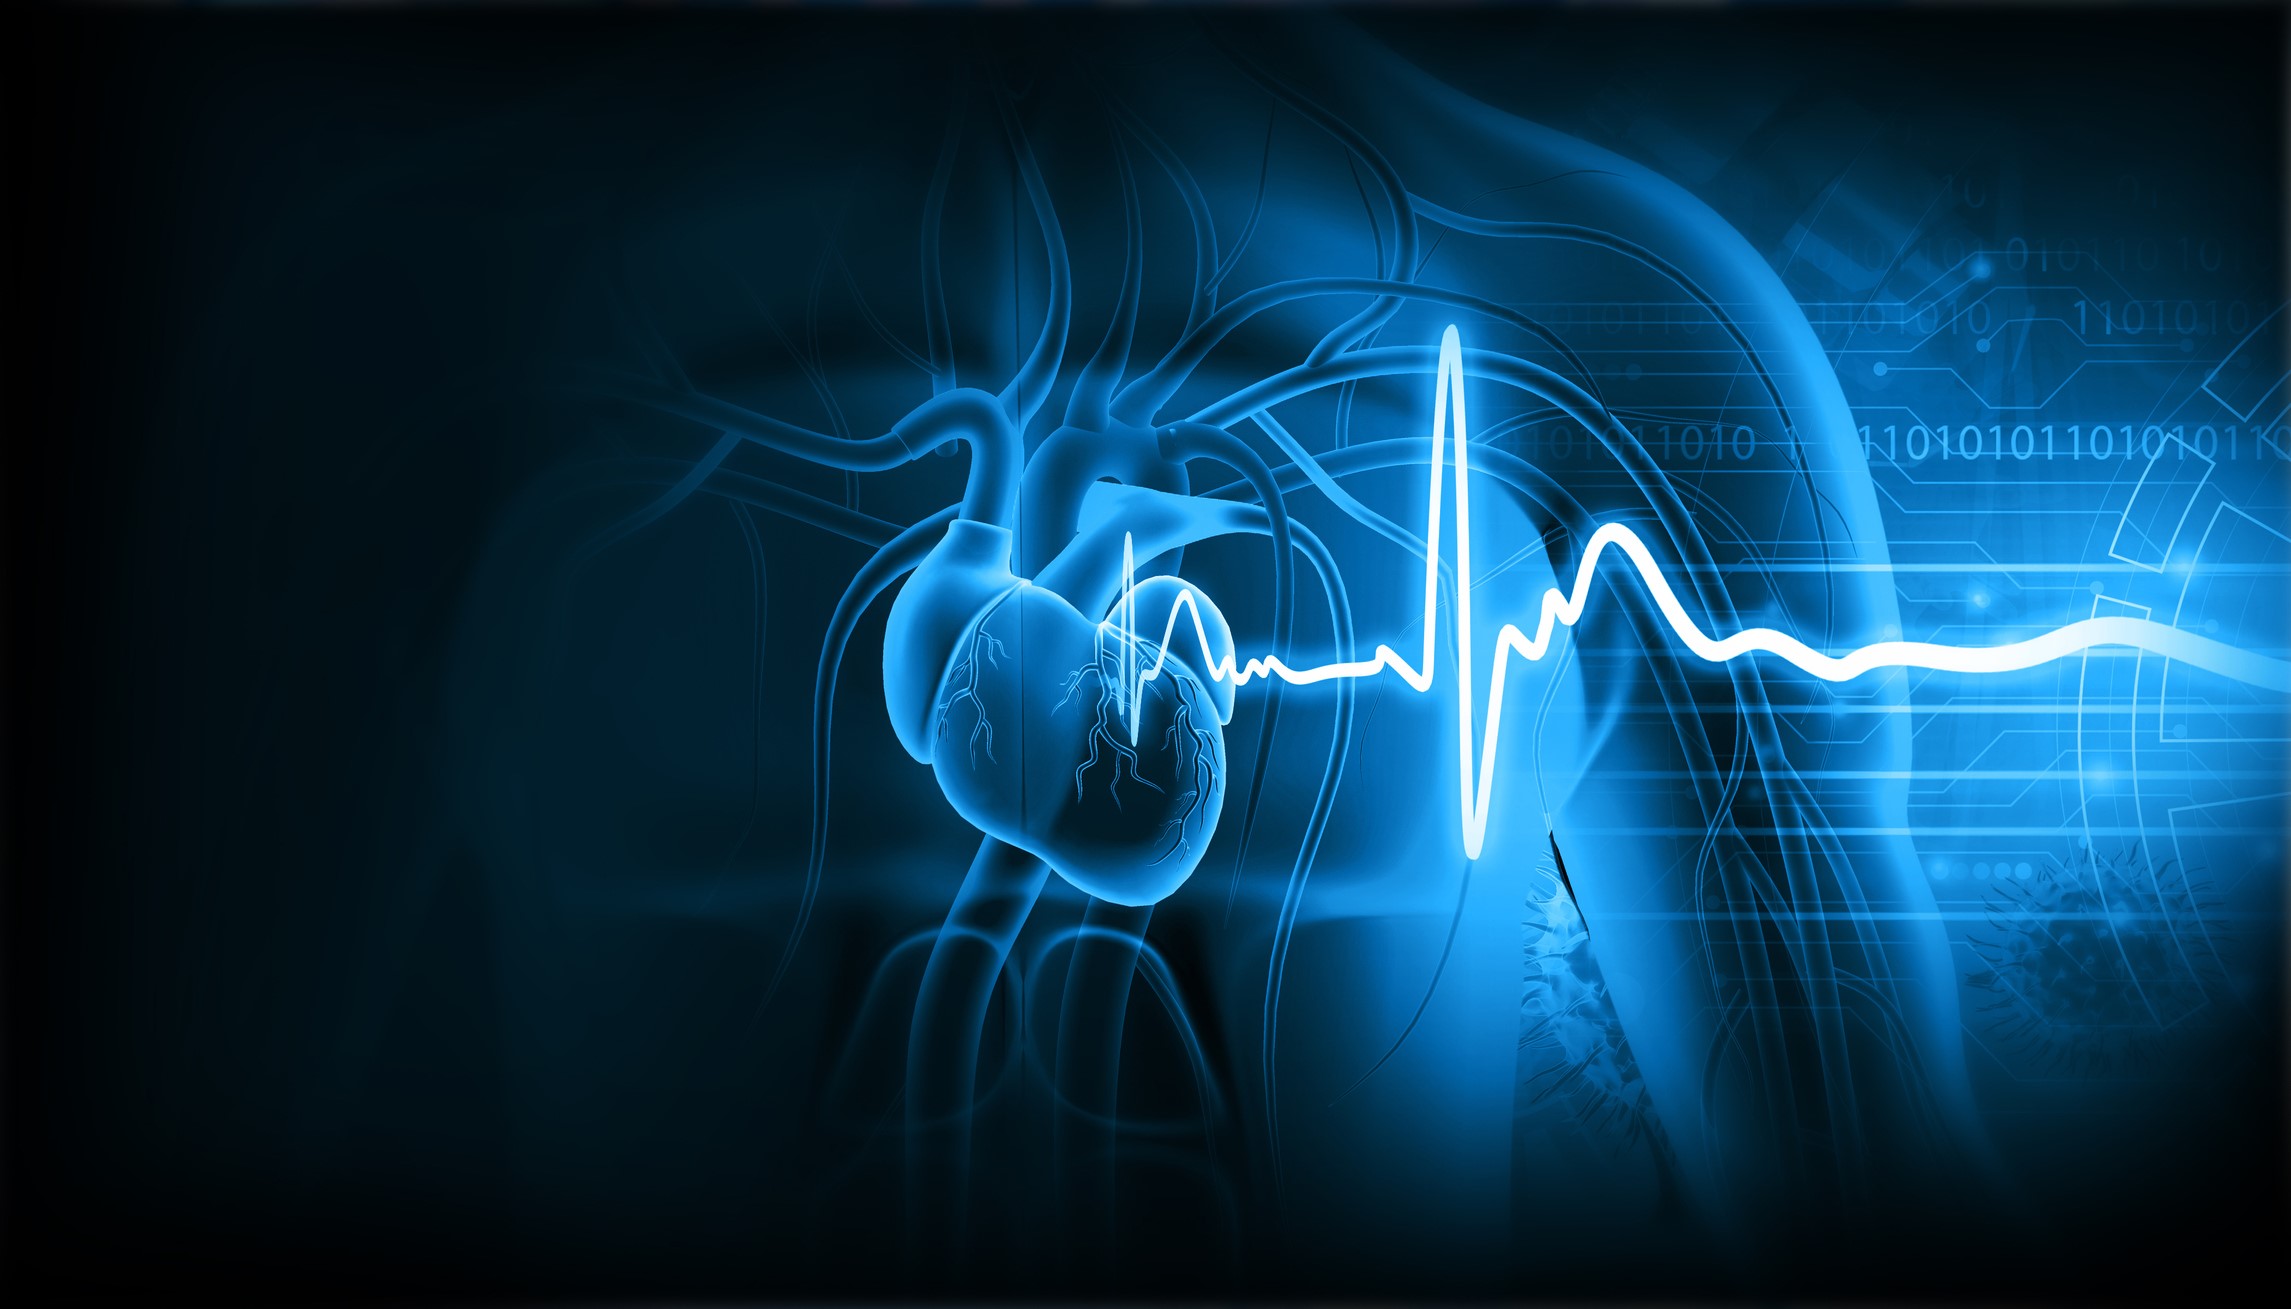 Human heart with ecg graph - stock photo Rasi BhadramaniGetty Images